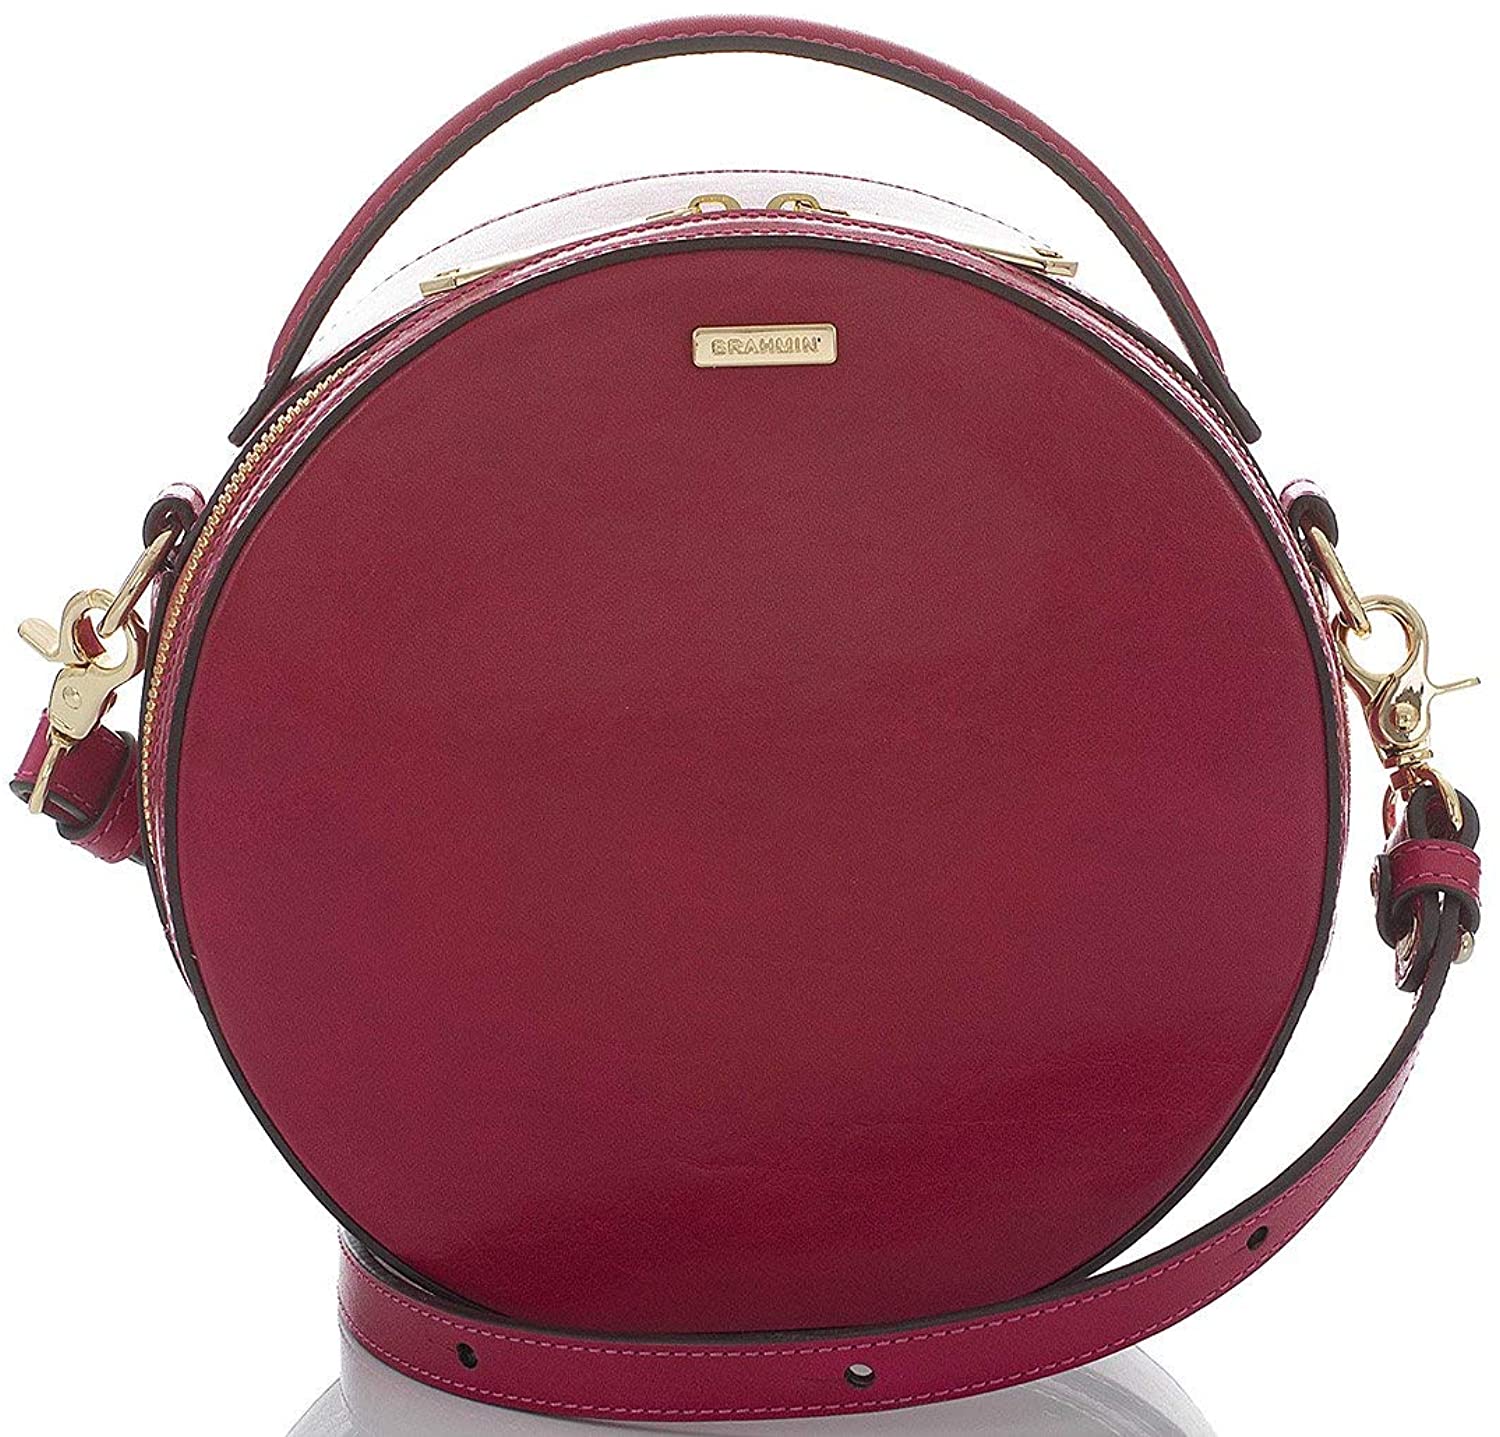 Price:$195.00 Brahmin Lane Leather Shoulder Bag Fuschia  Handbags   